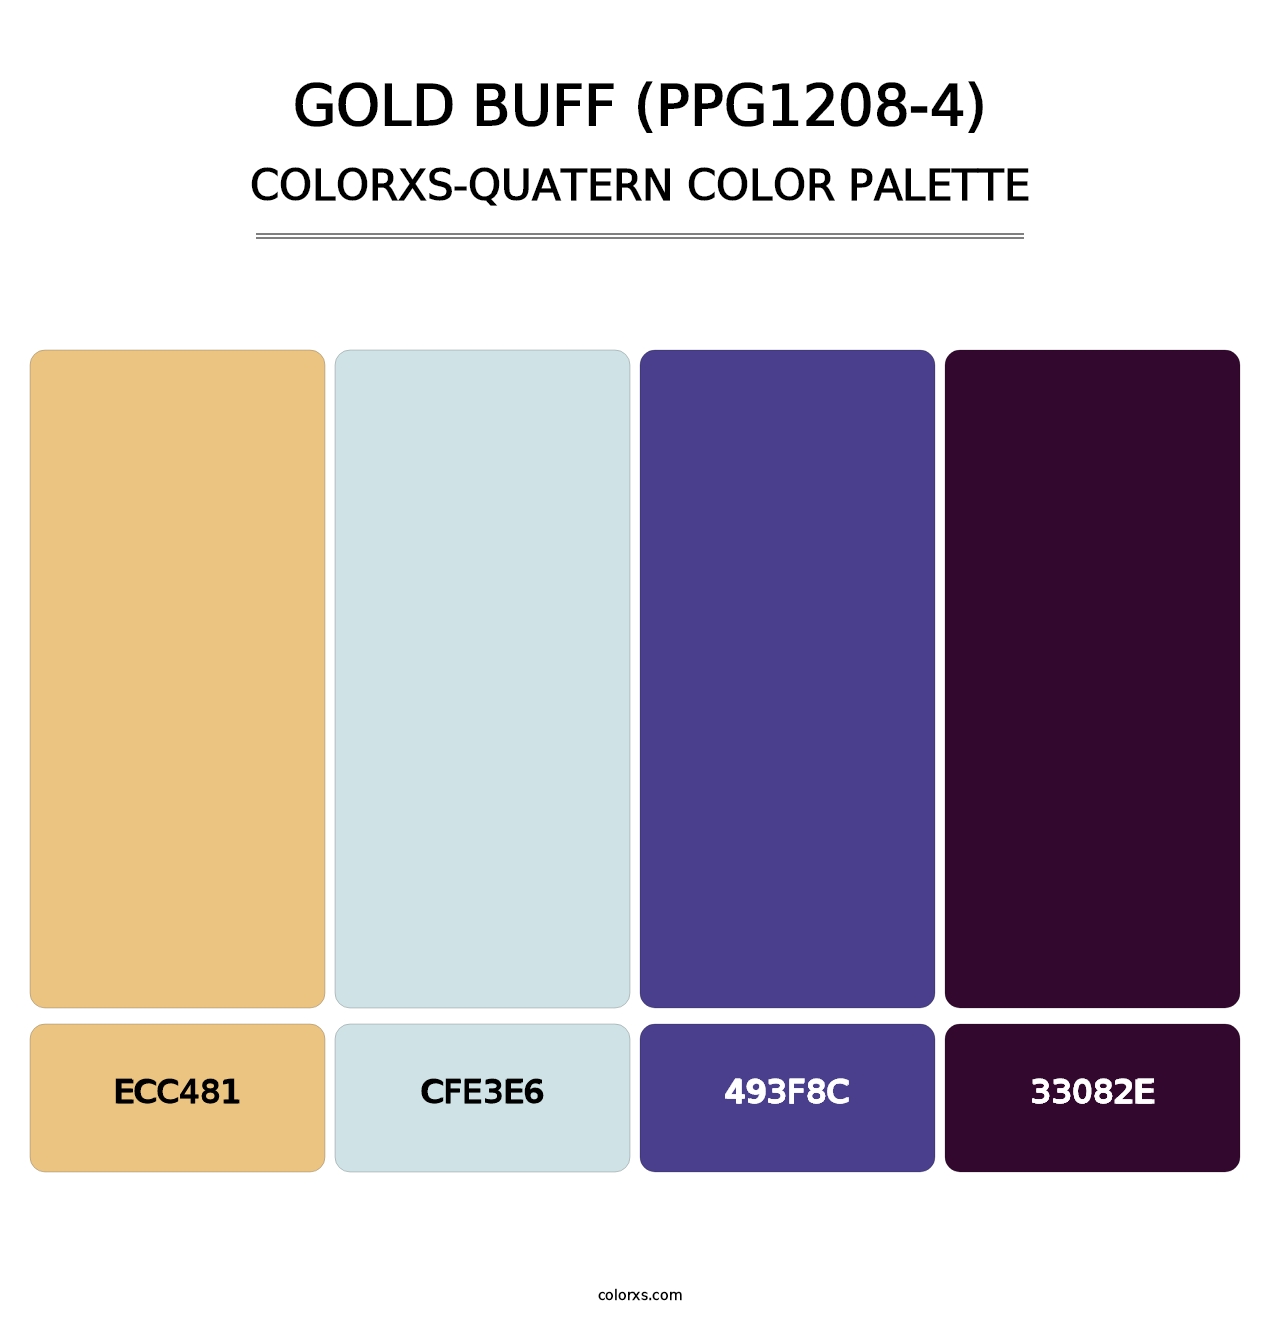 Gold Buff (PPG1208-4) - Colorxs Quatern Palette